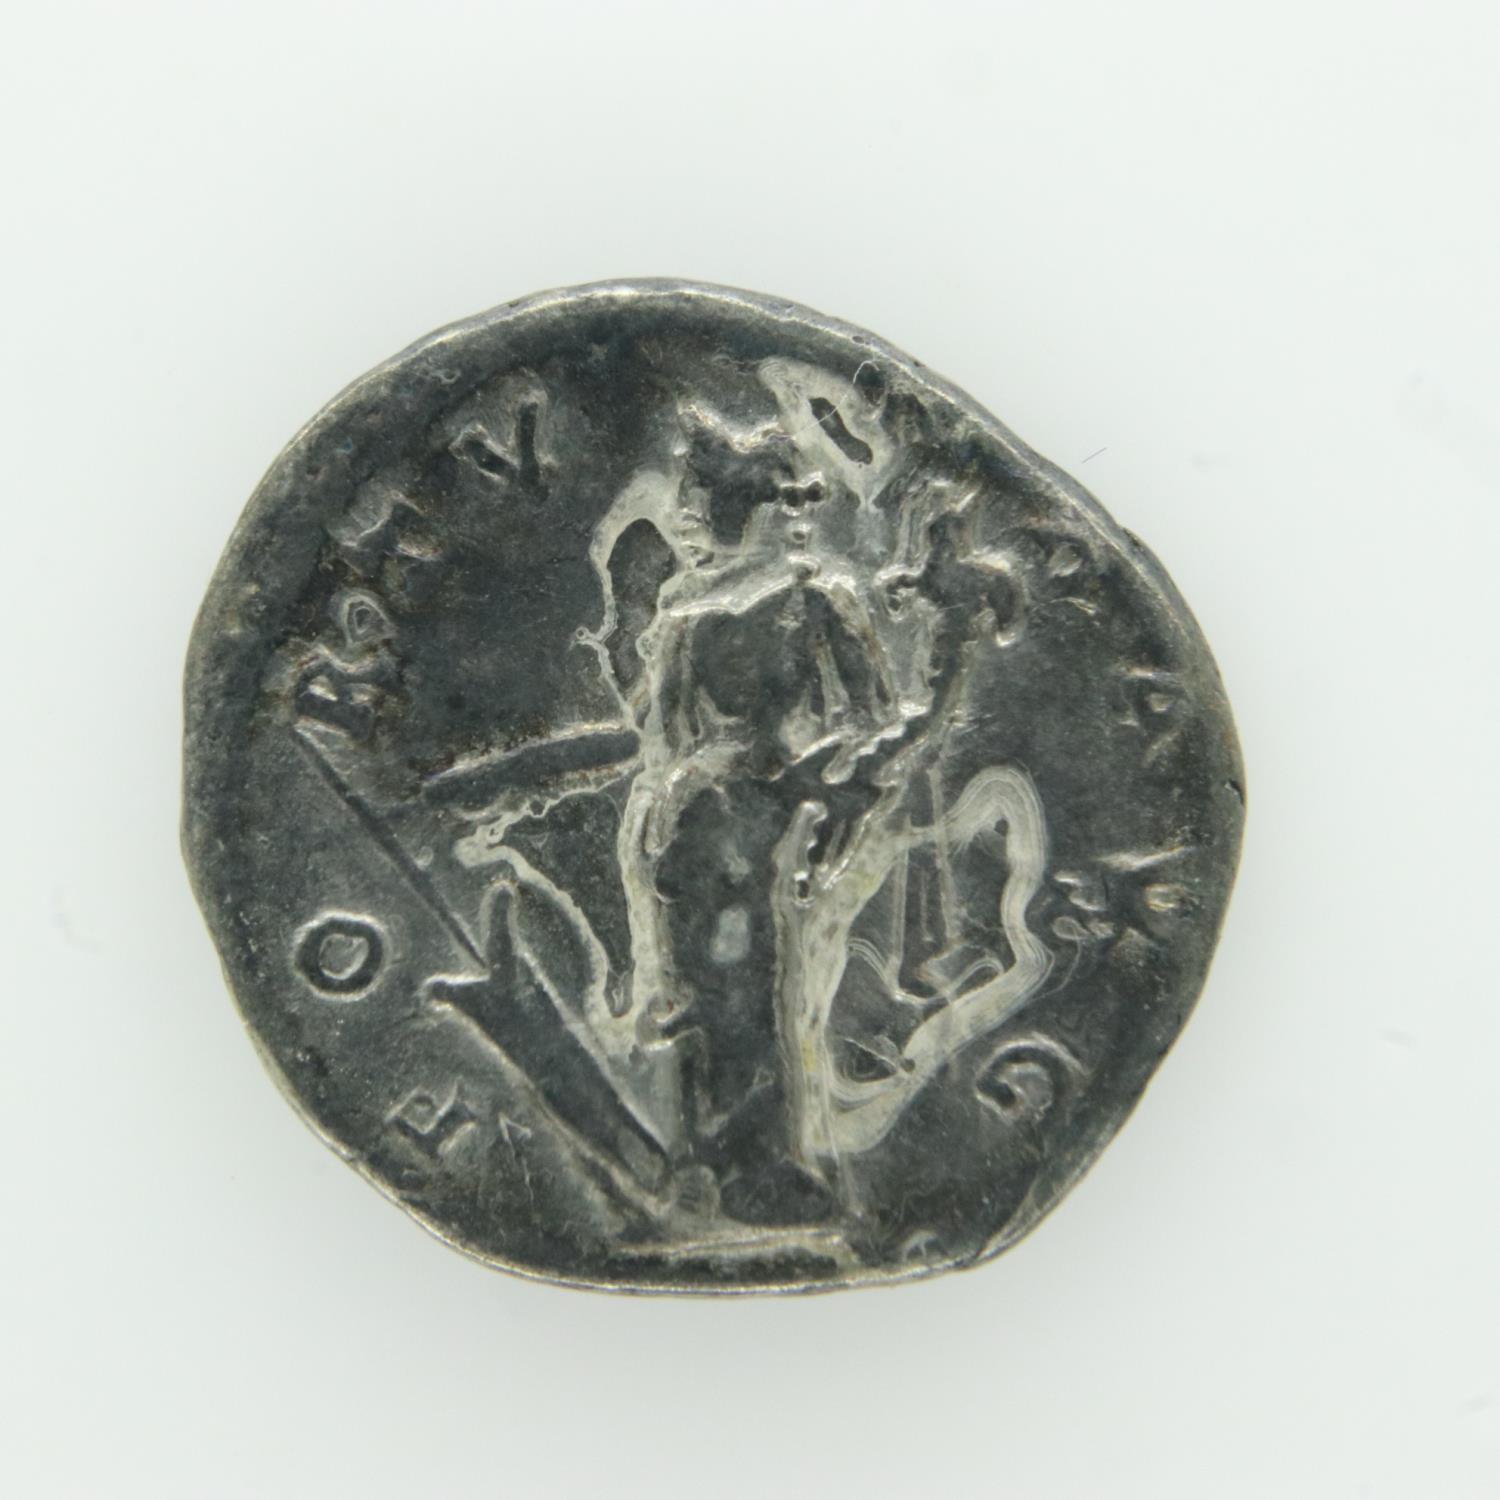 Roman silver Denarius of Emperor Hadrian at fortification five, VF grade. UK P&P Group 0 (£6+VAT for